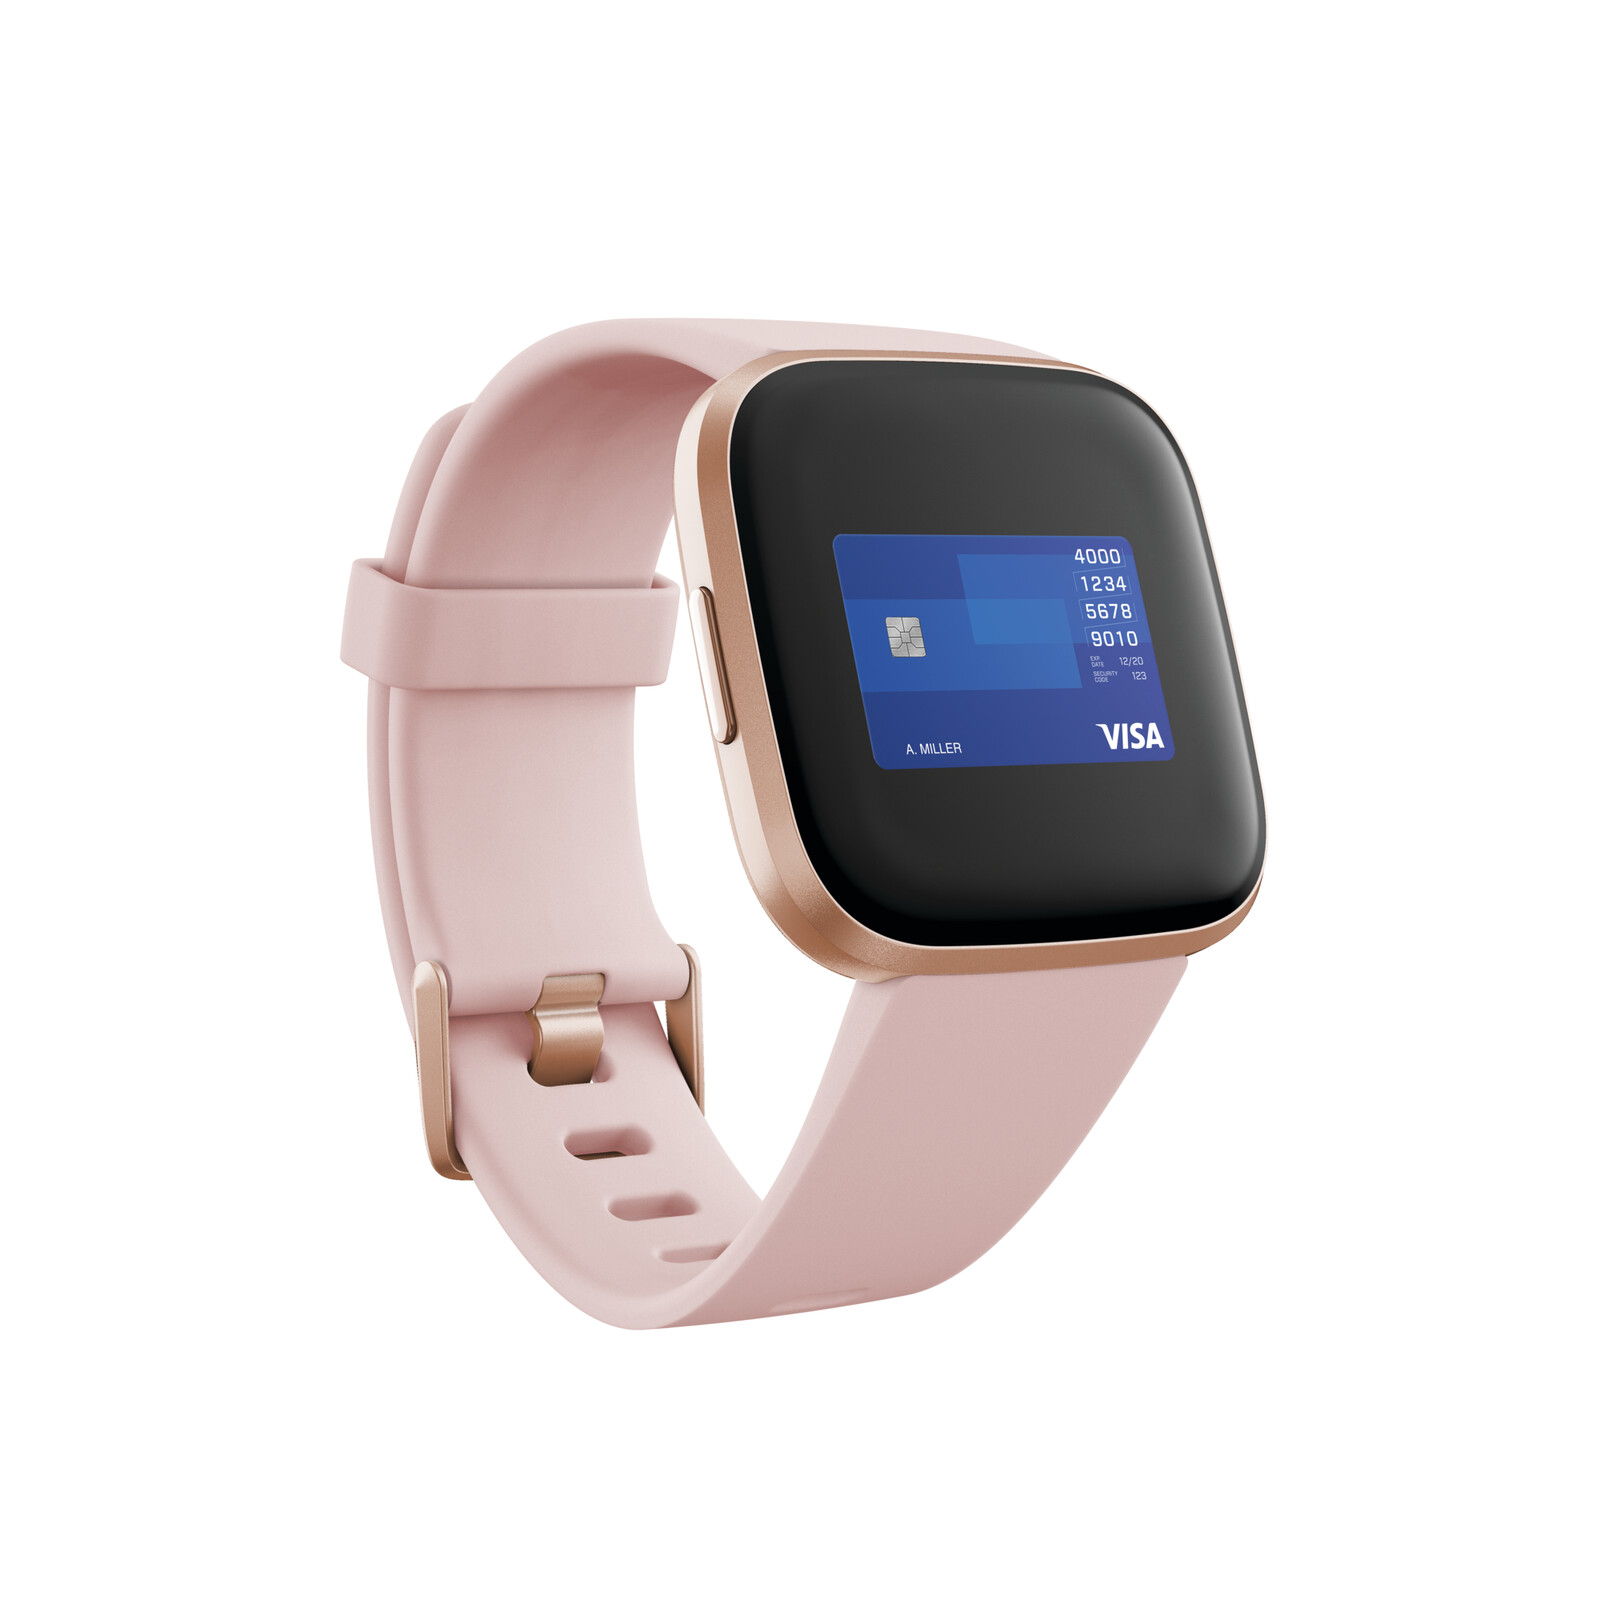 Smart watch Fitbit Versa 2 Review - how 